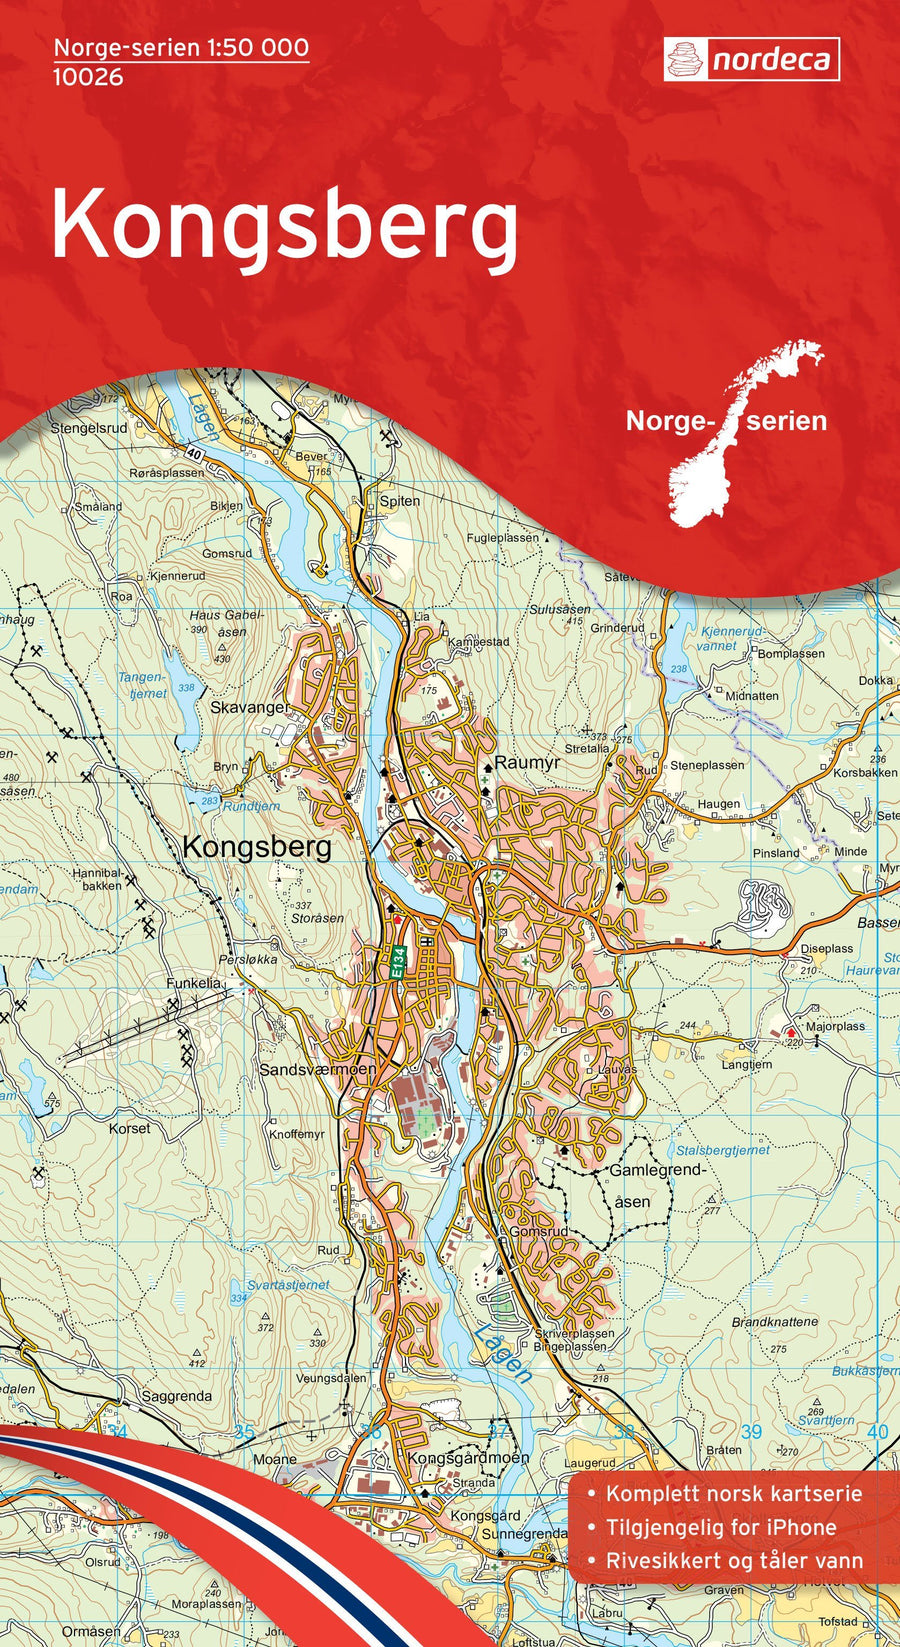 Carte de randonnée n° 10026 - Kongsberg (Norvège) | Nordeca - Norge-serien carte pliée Nordeca 